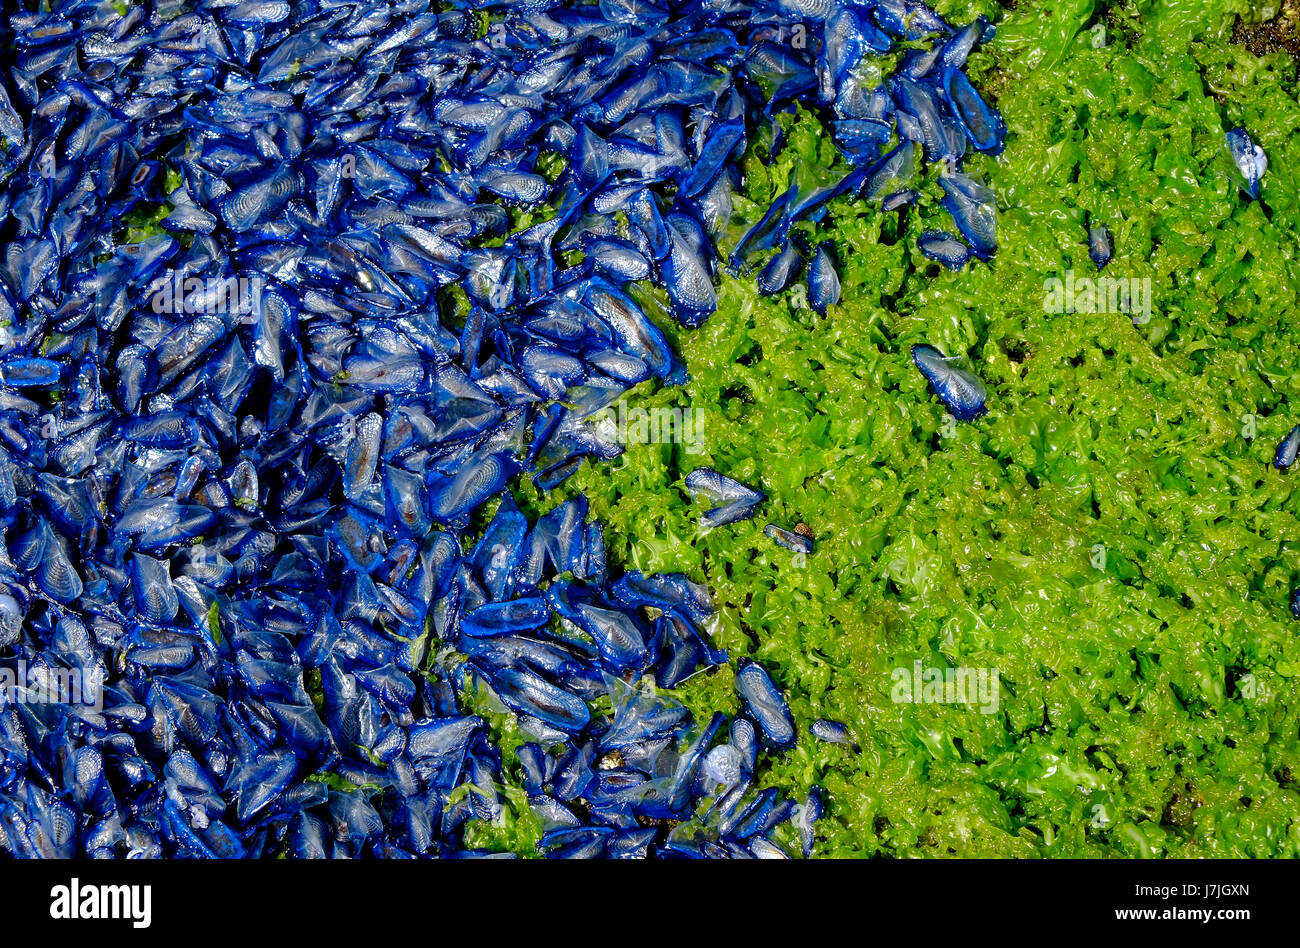 velella, bright blue sea creatures, sardinia, italy Stock Photo